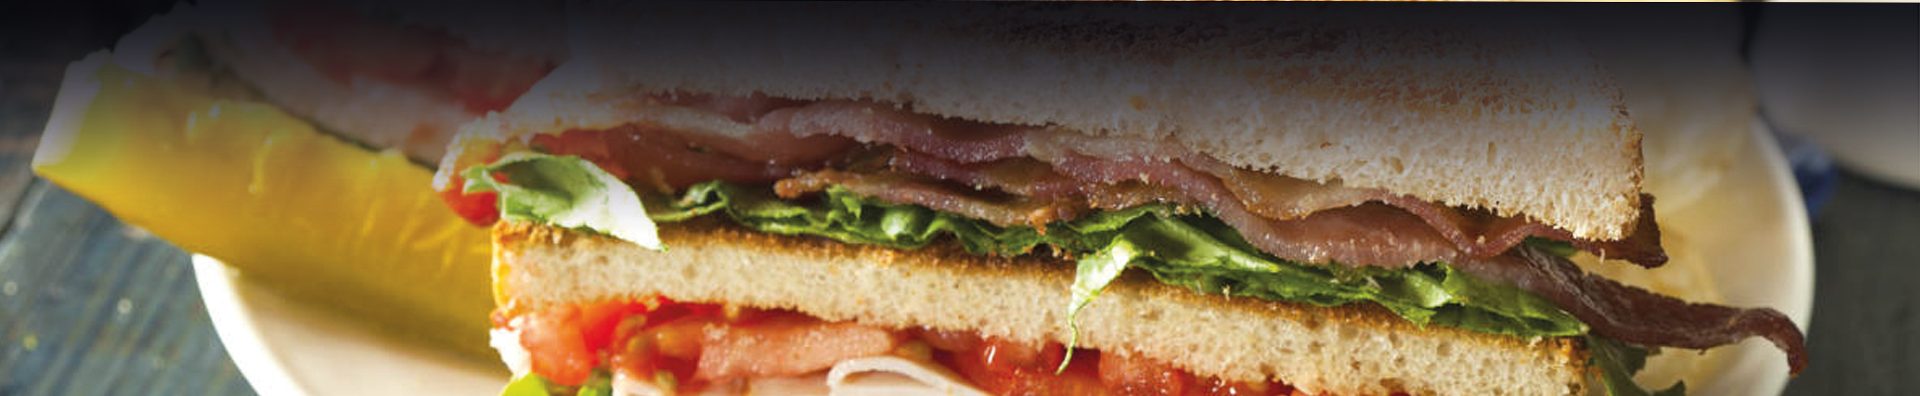 Linea TubeORIGINAL Selection Sandwich background